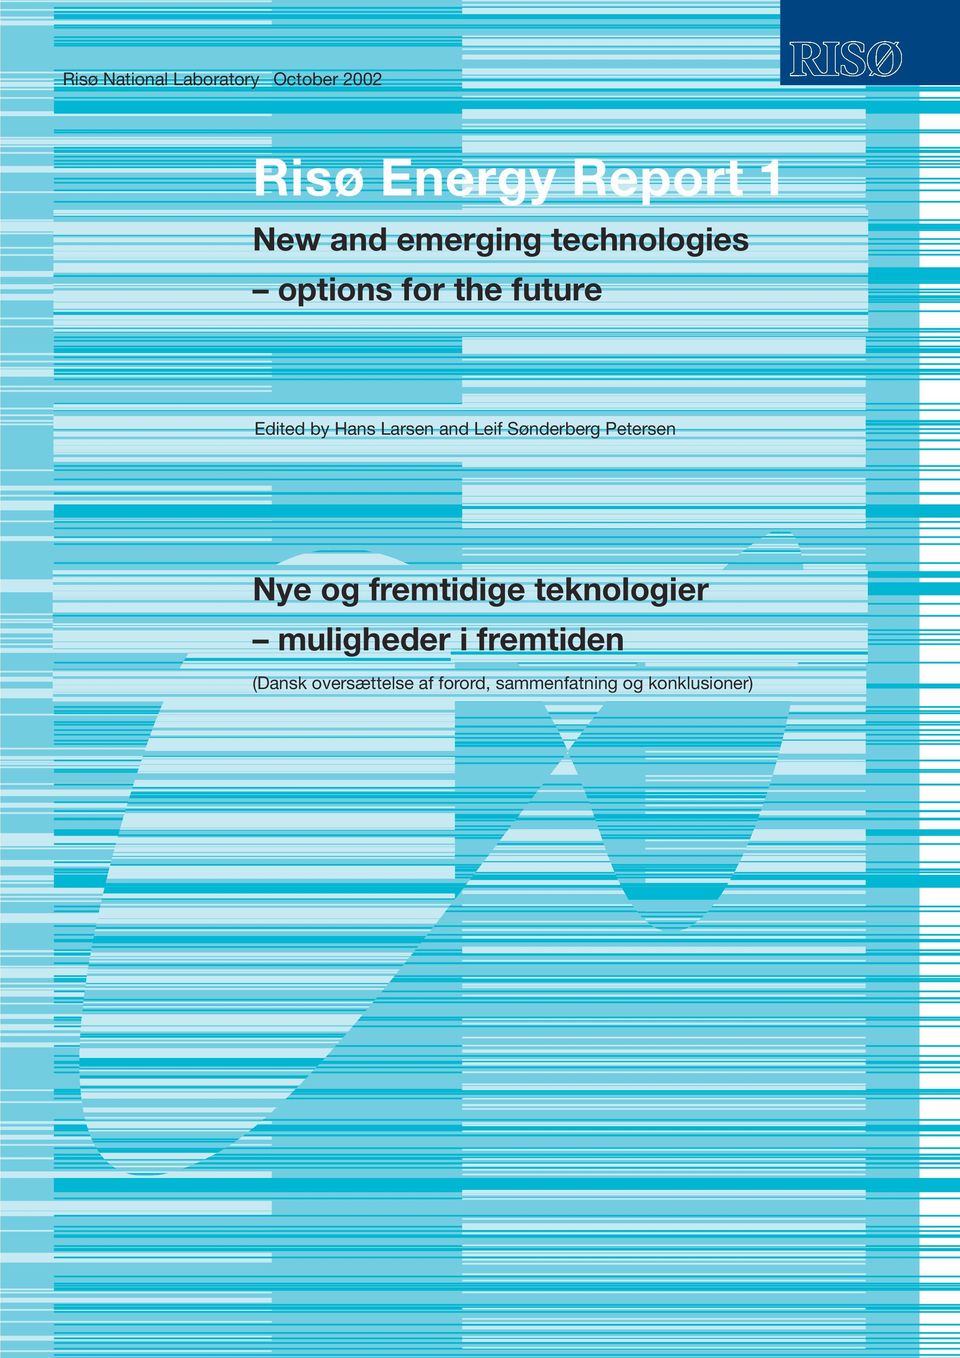 future Edited by Hans Larsen and Leif Sønderberg